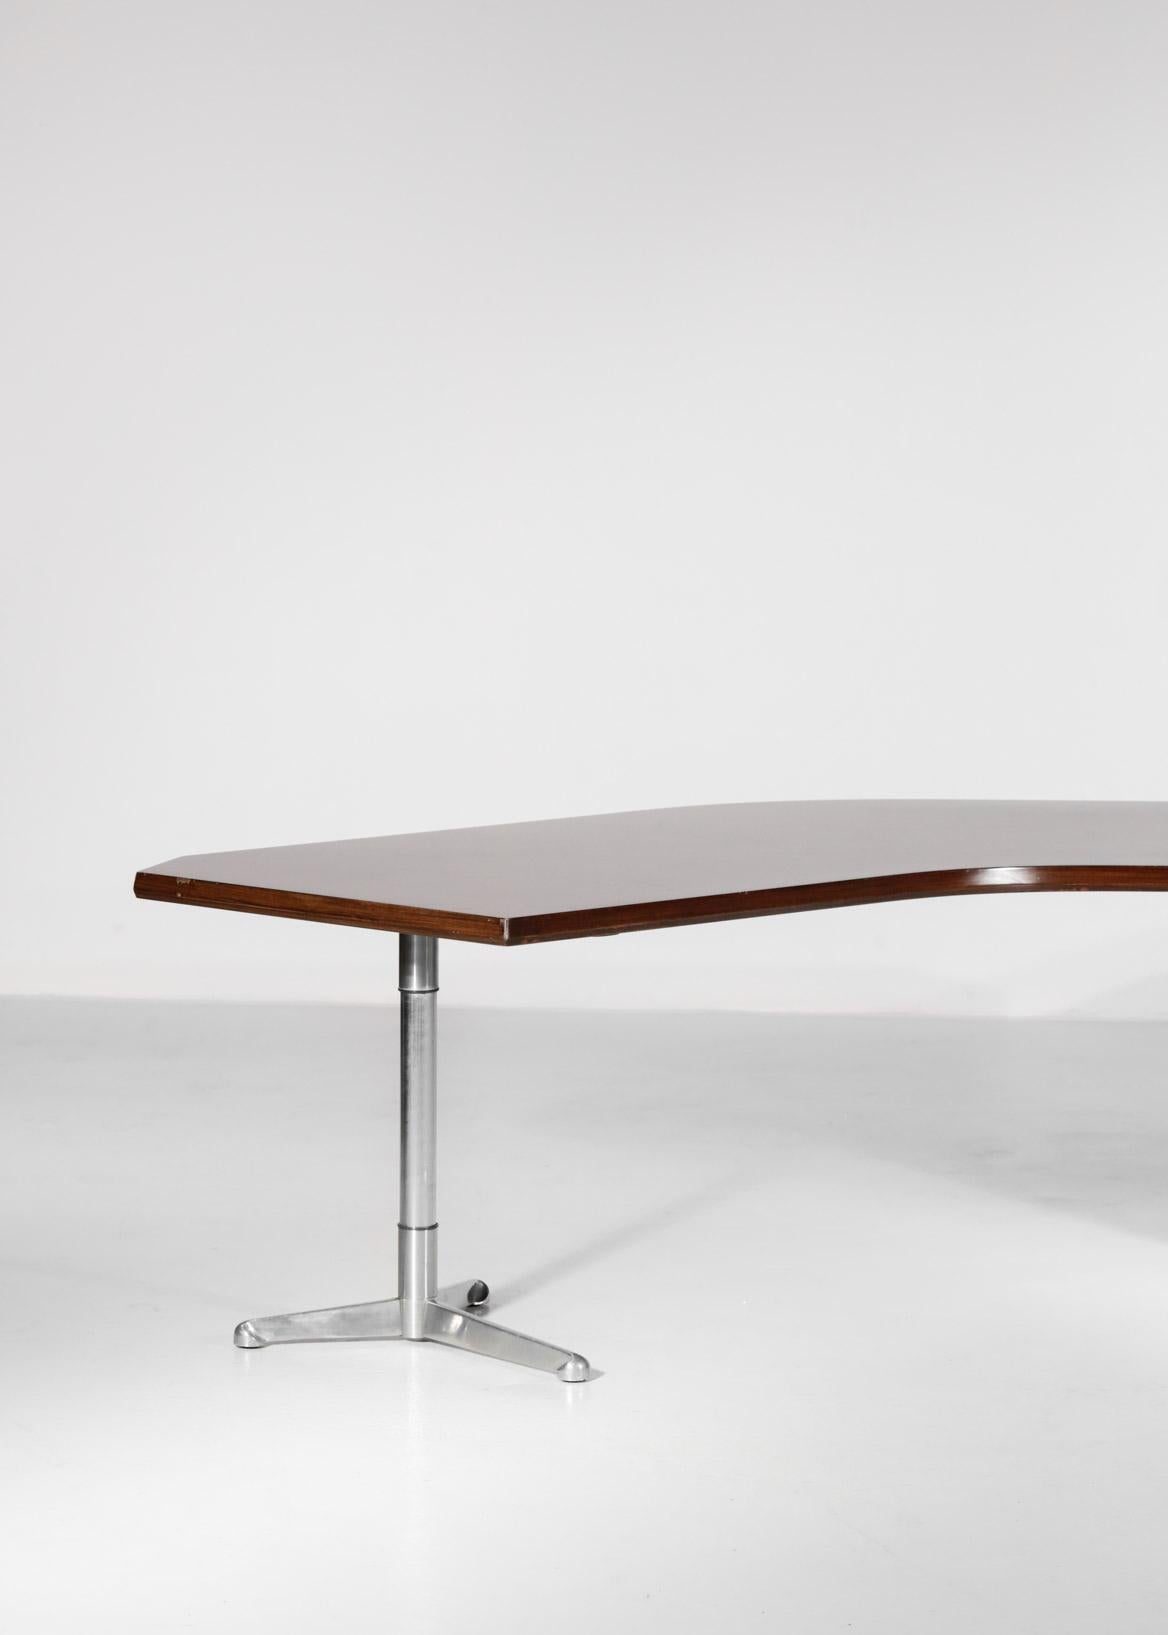 Mid-20th Century Italian Desk by Osvaldo Borsani for Tecno Midcentury Design T96 Boomerang 1950s